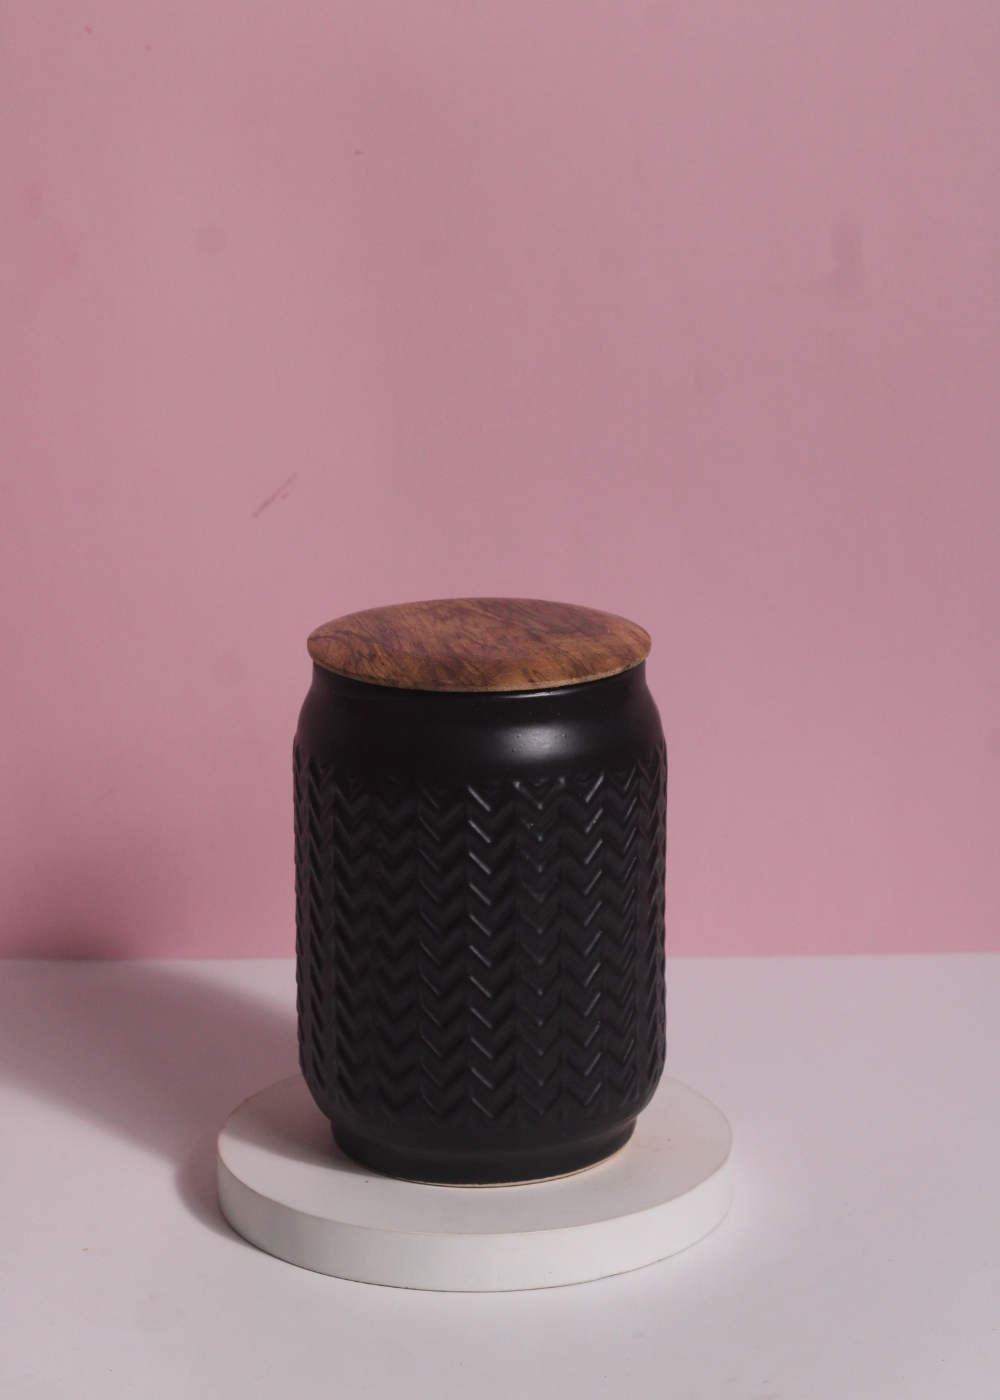 Black storage jar on white surface